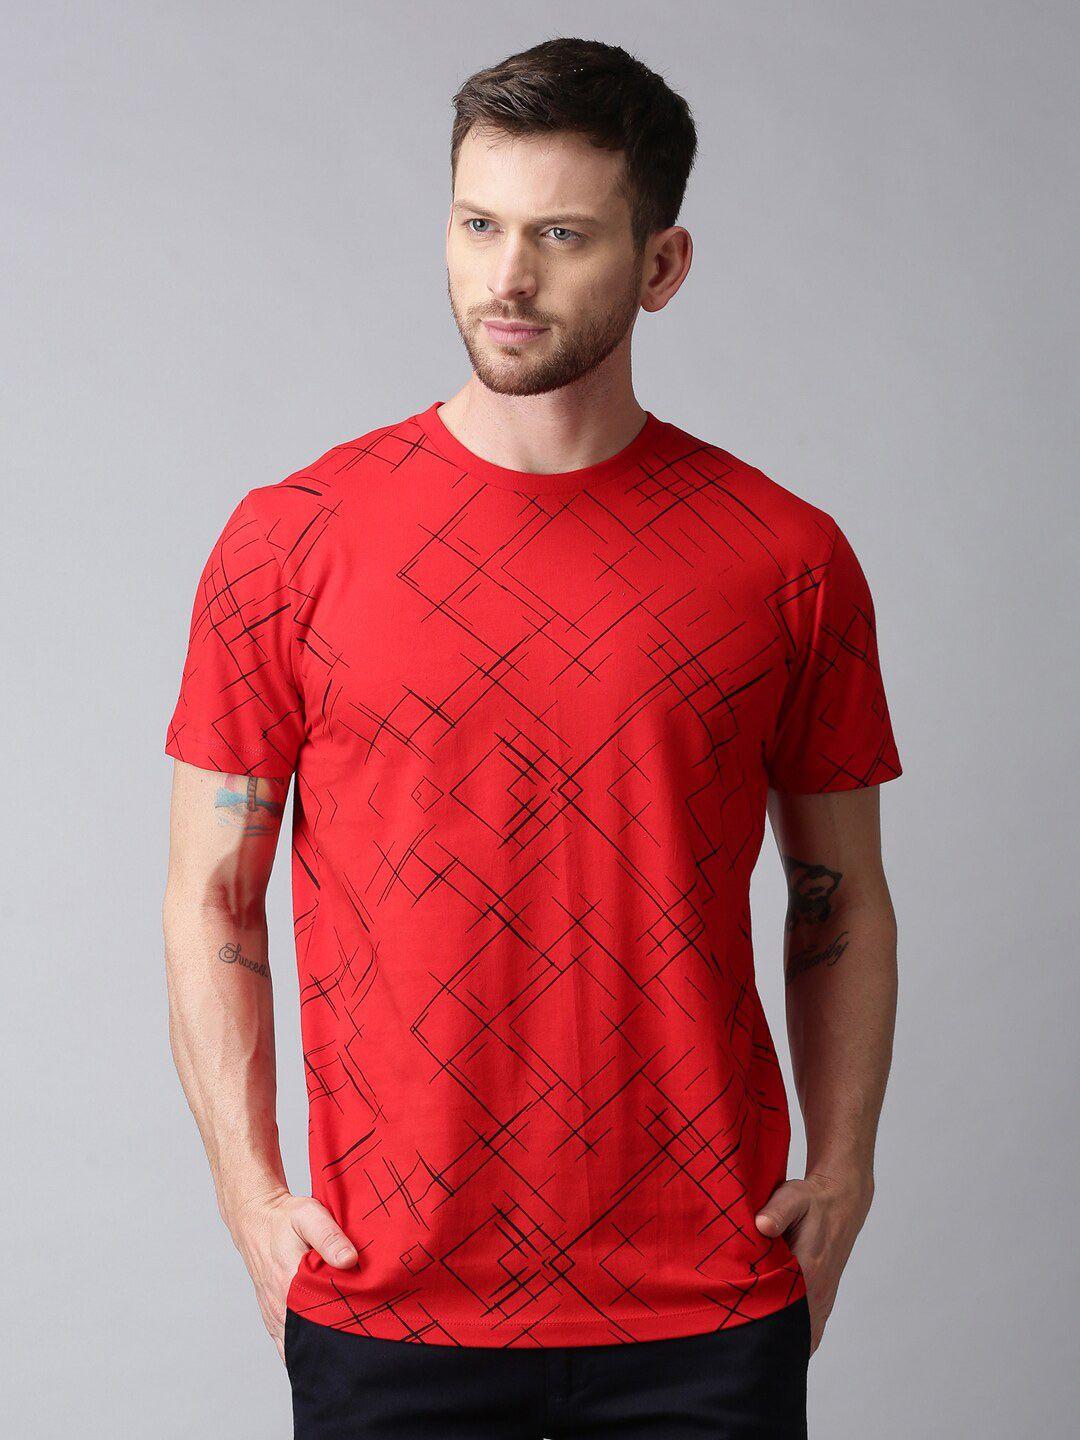 urgear-men-red-printed-t-shirt